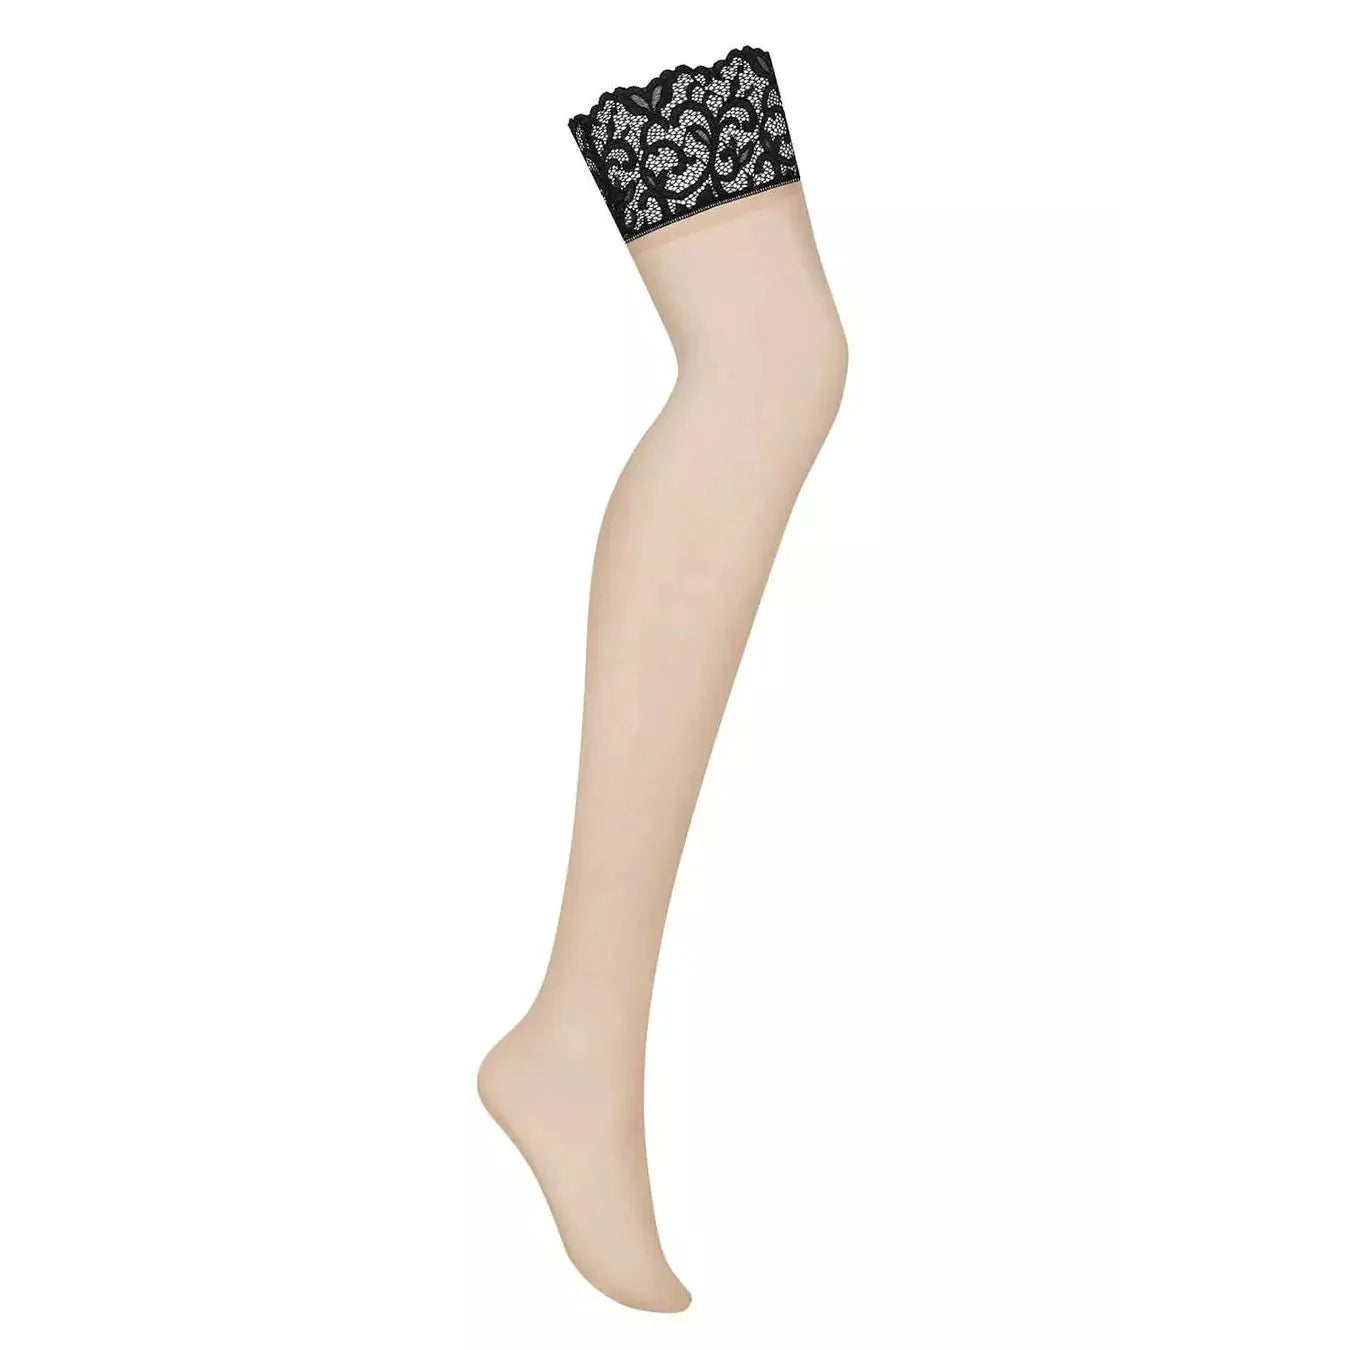 Obsessvie Joylace stockings